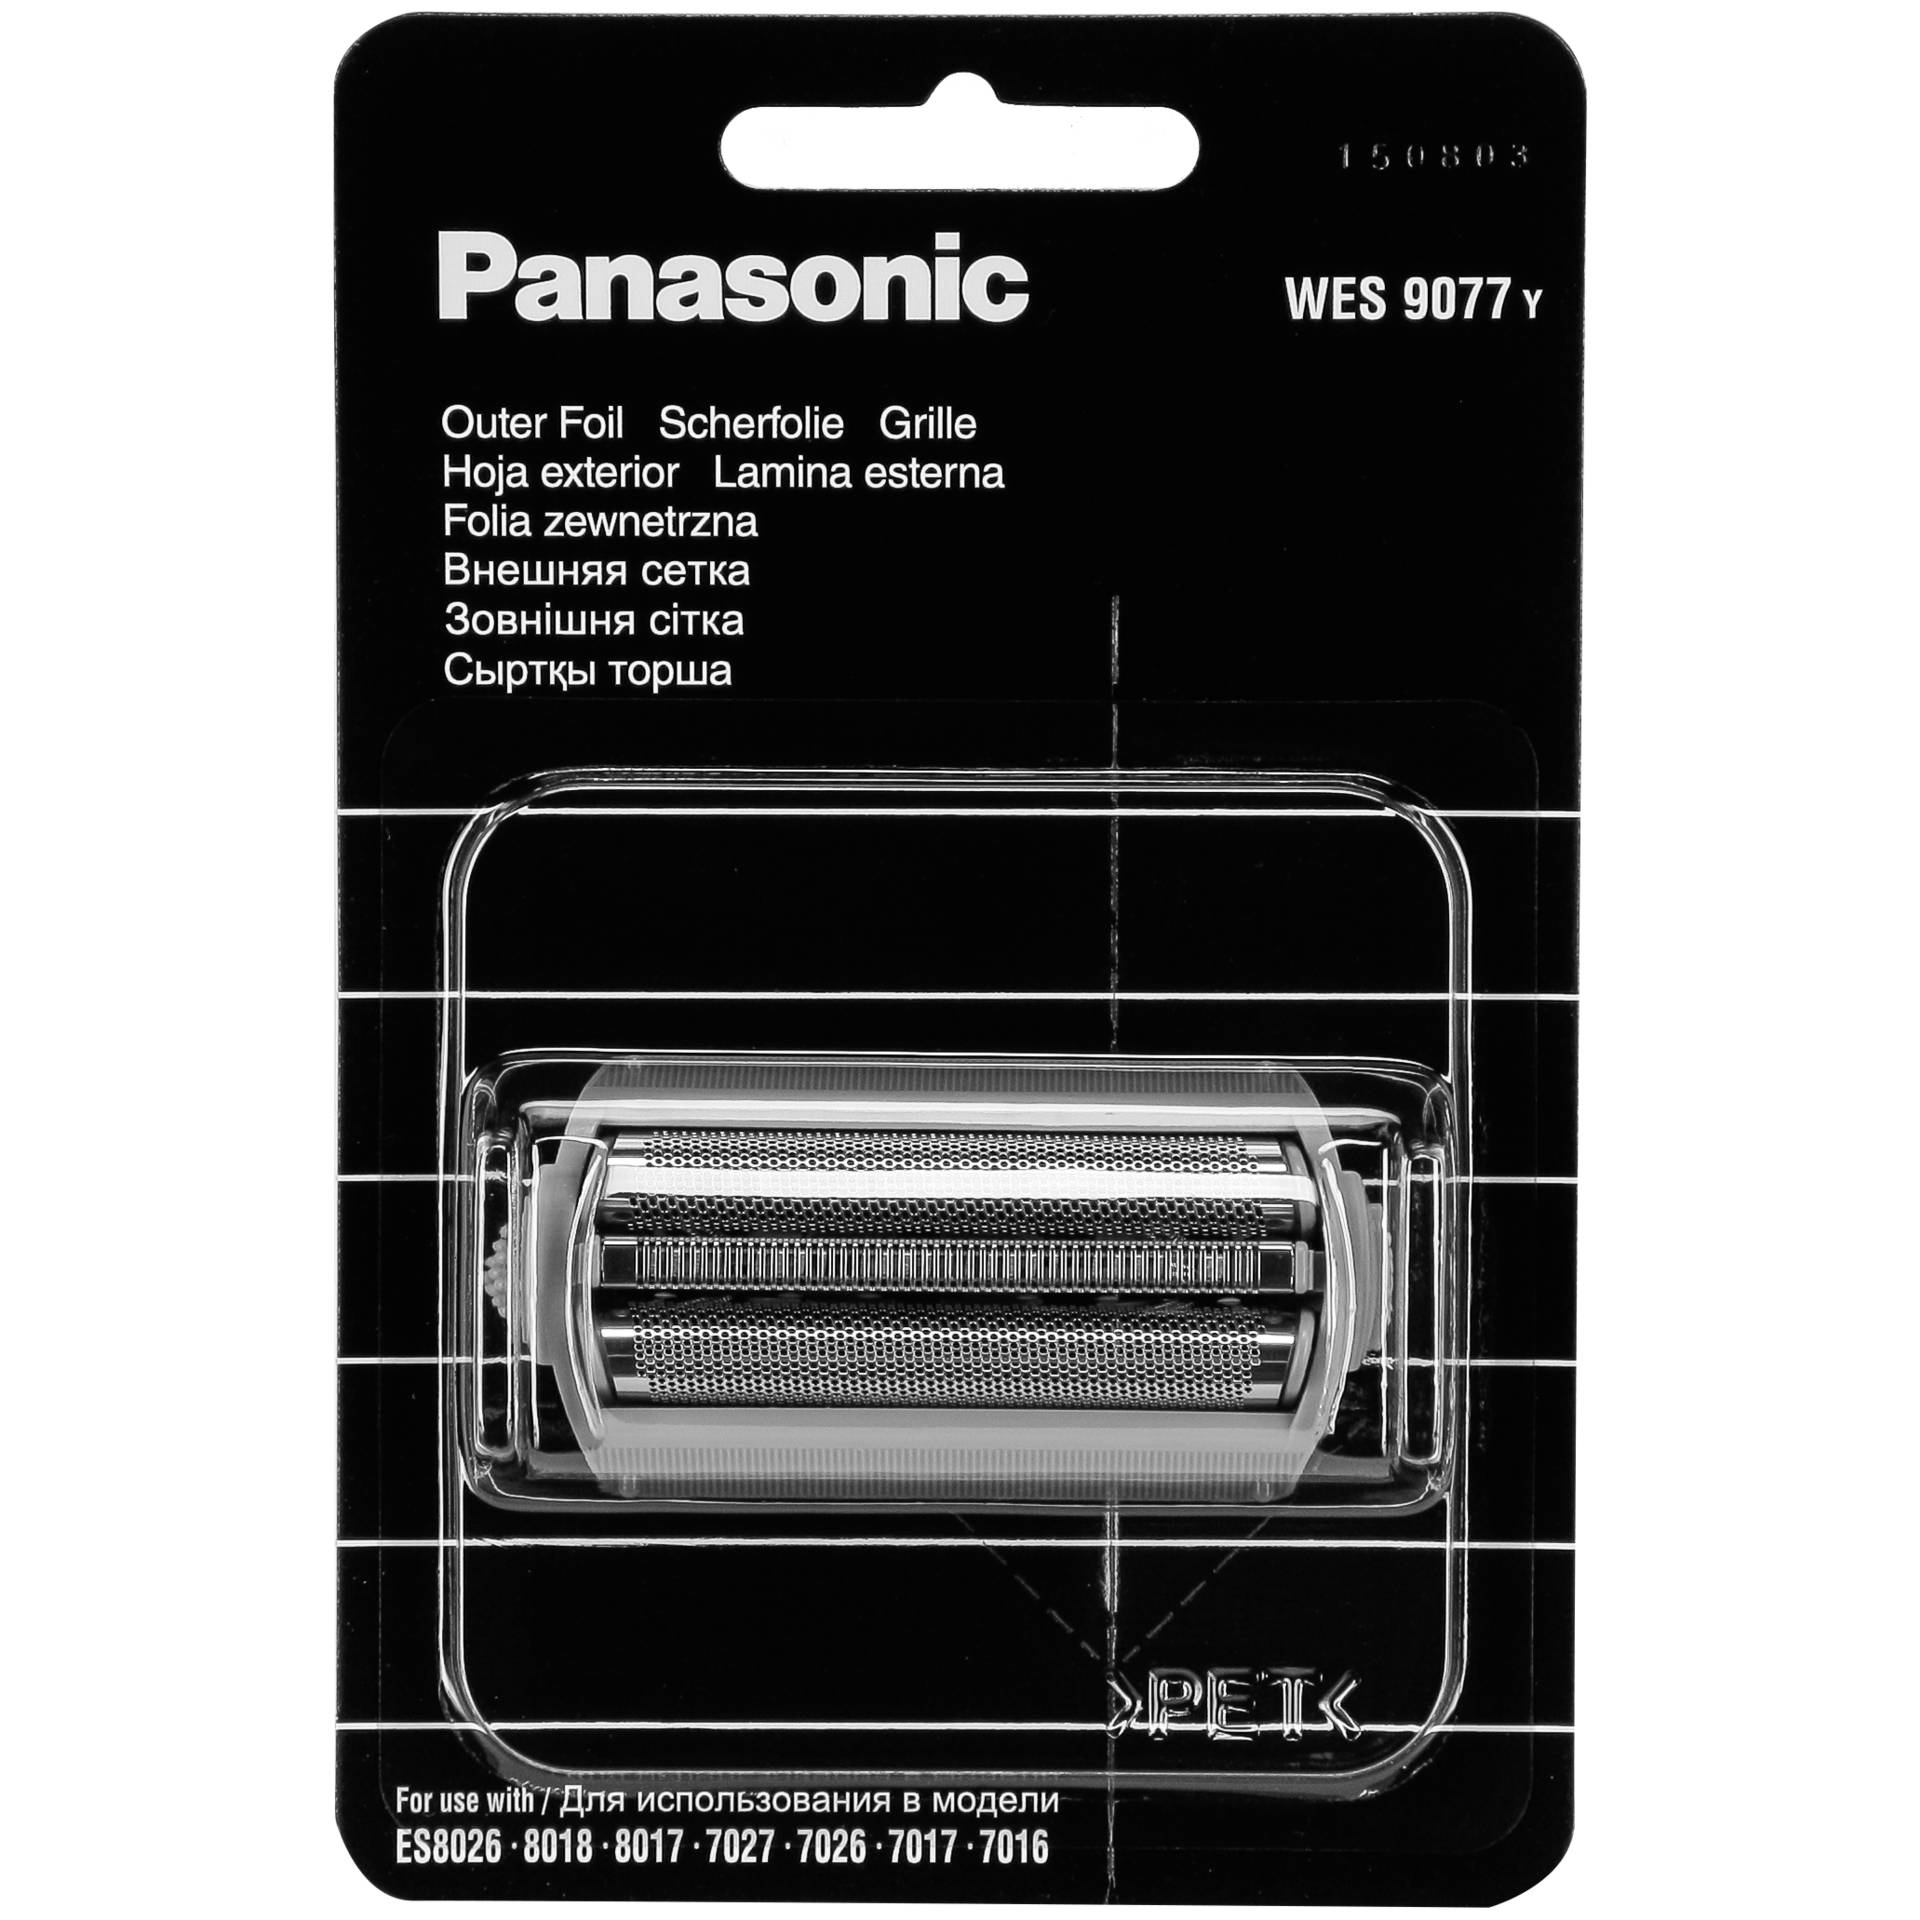 Panasonic WES 9077 Y 1361